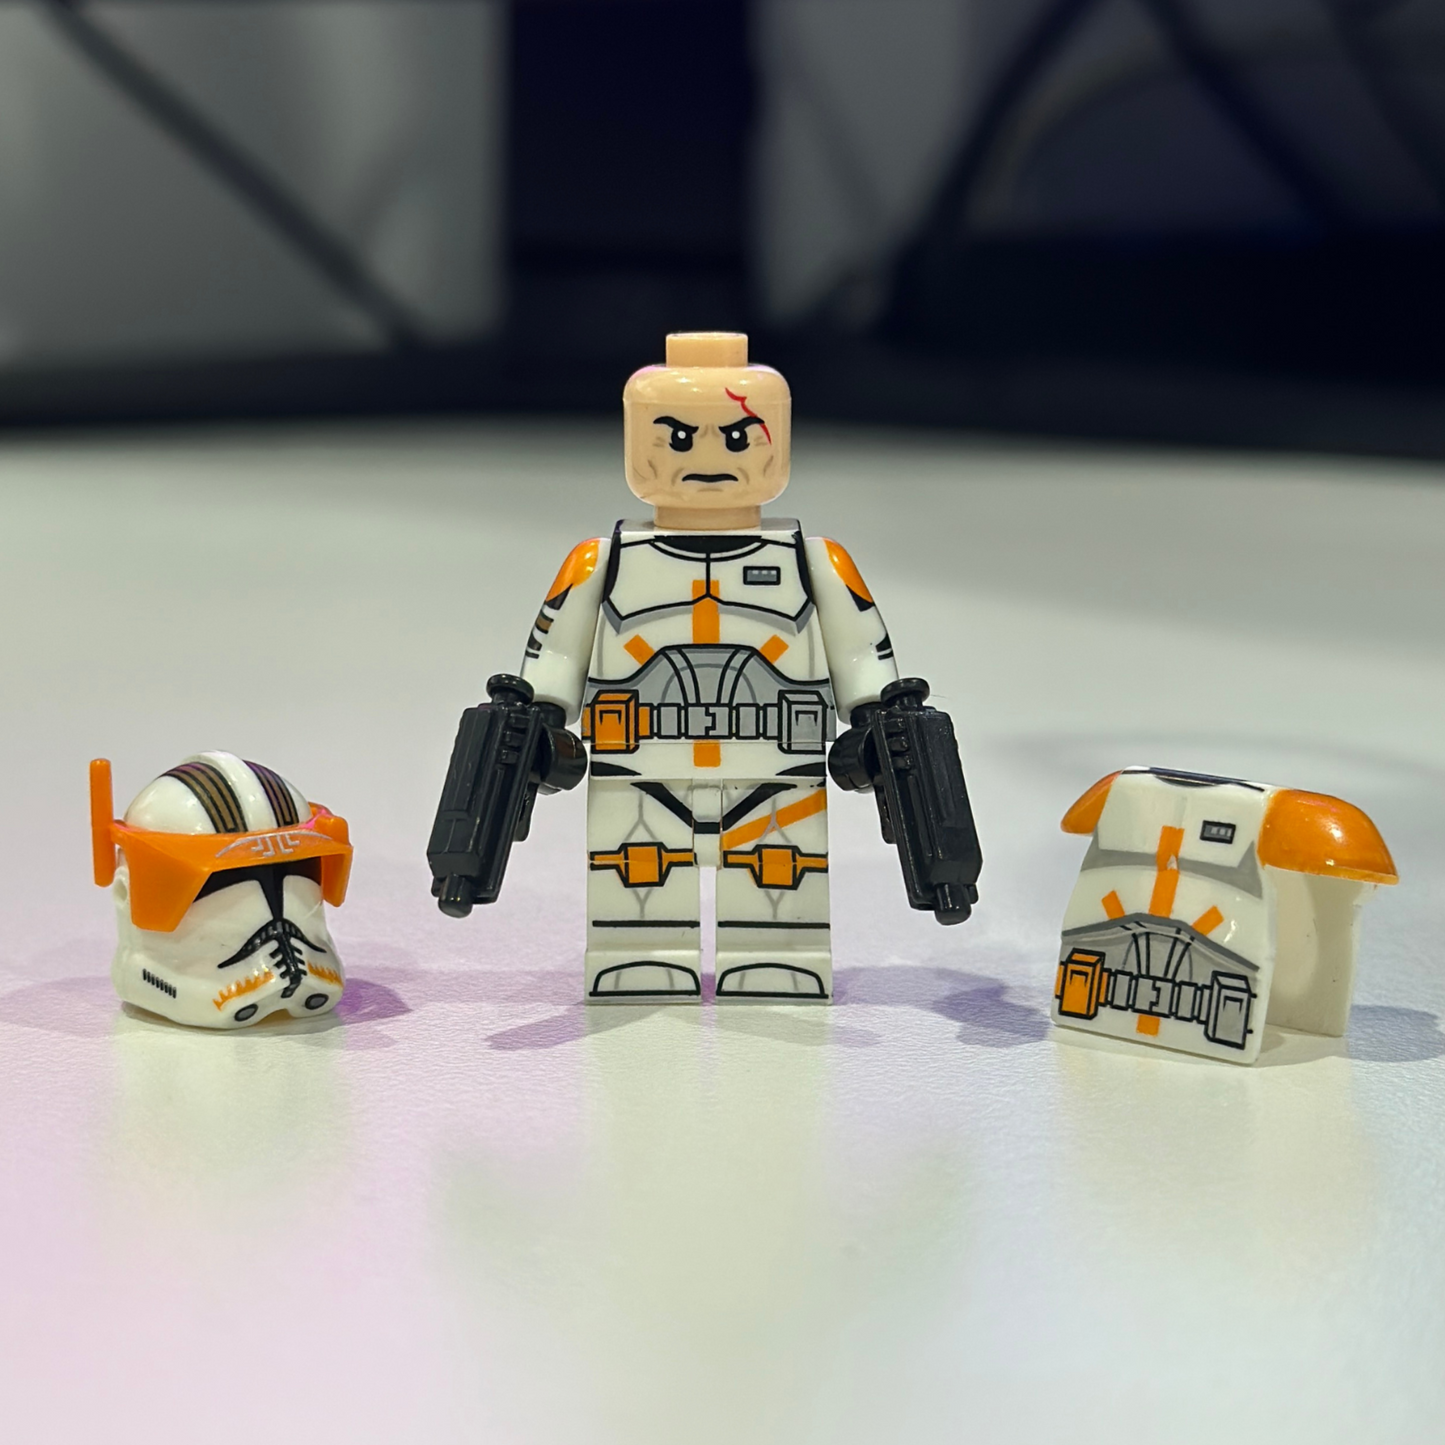 Star Wars Commander Cody Clone Trooper Minifigure - 212th Battalion